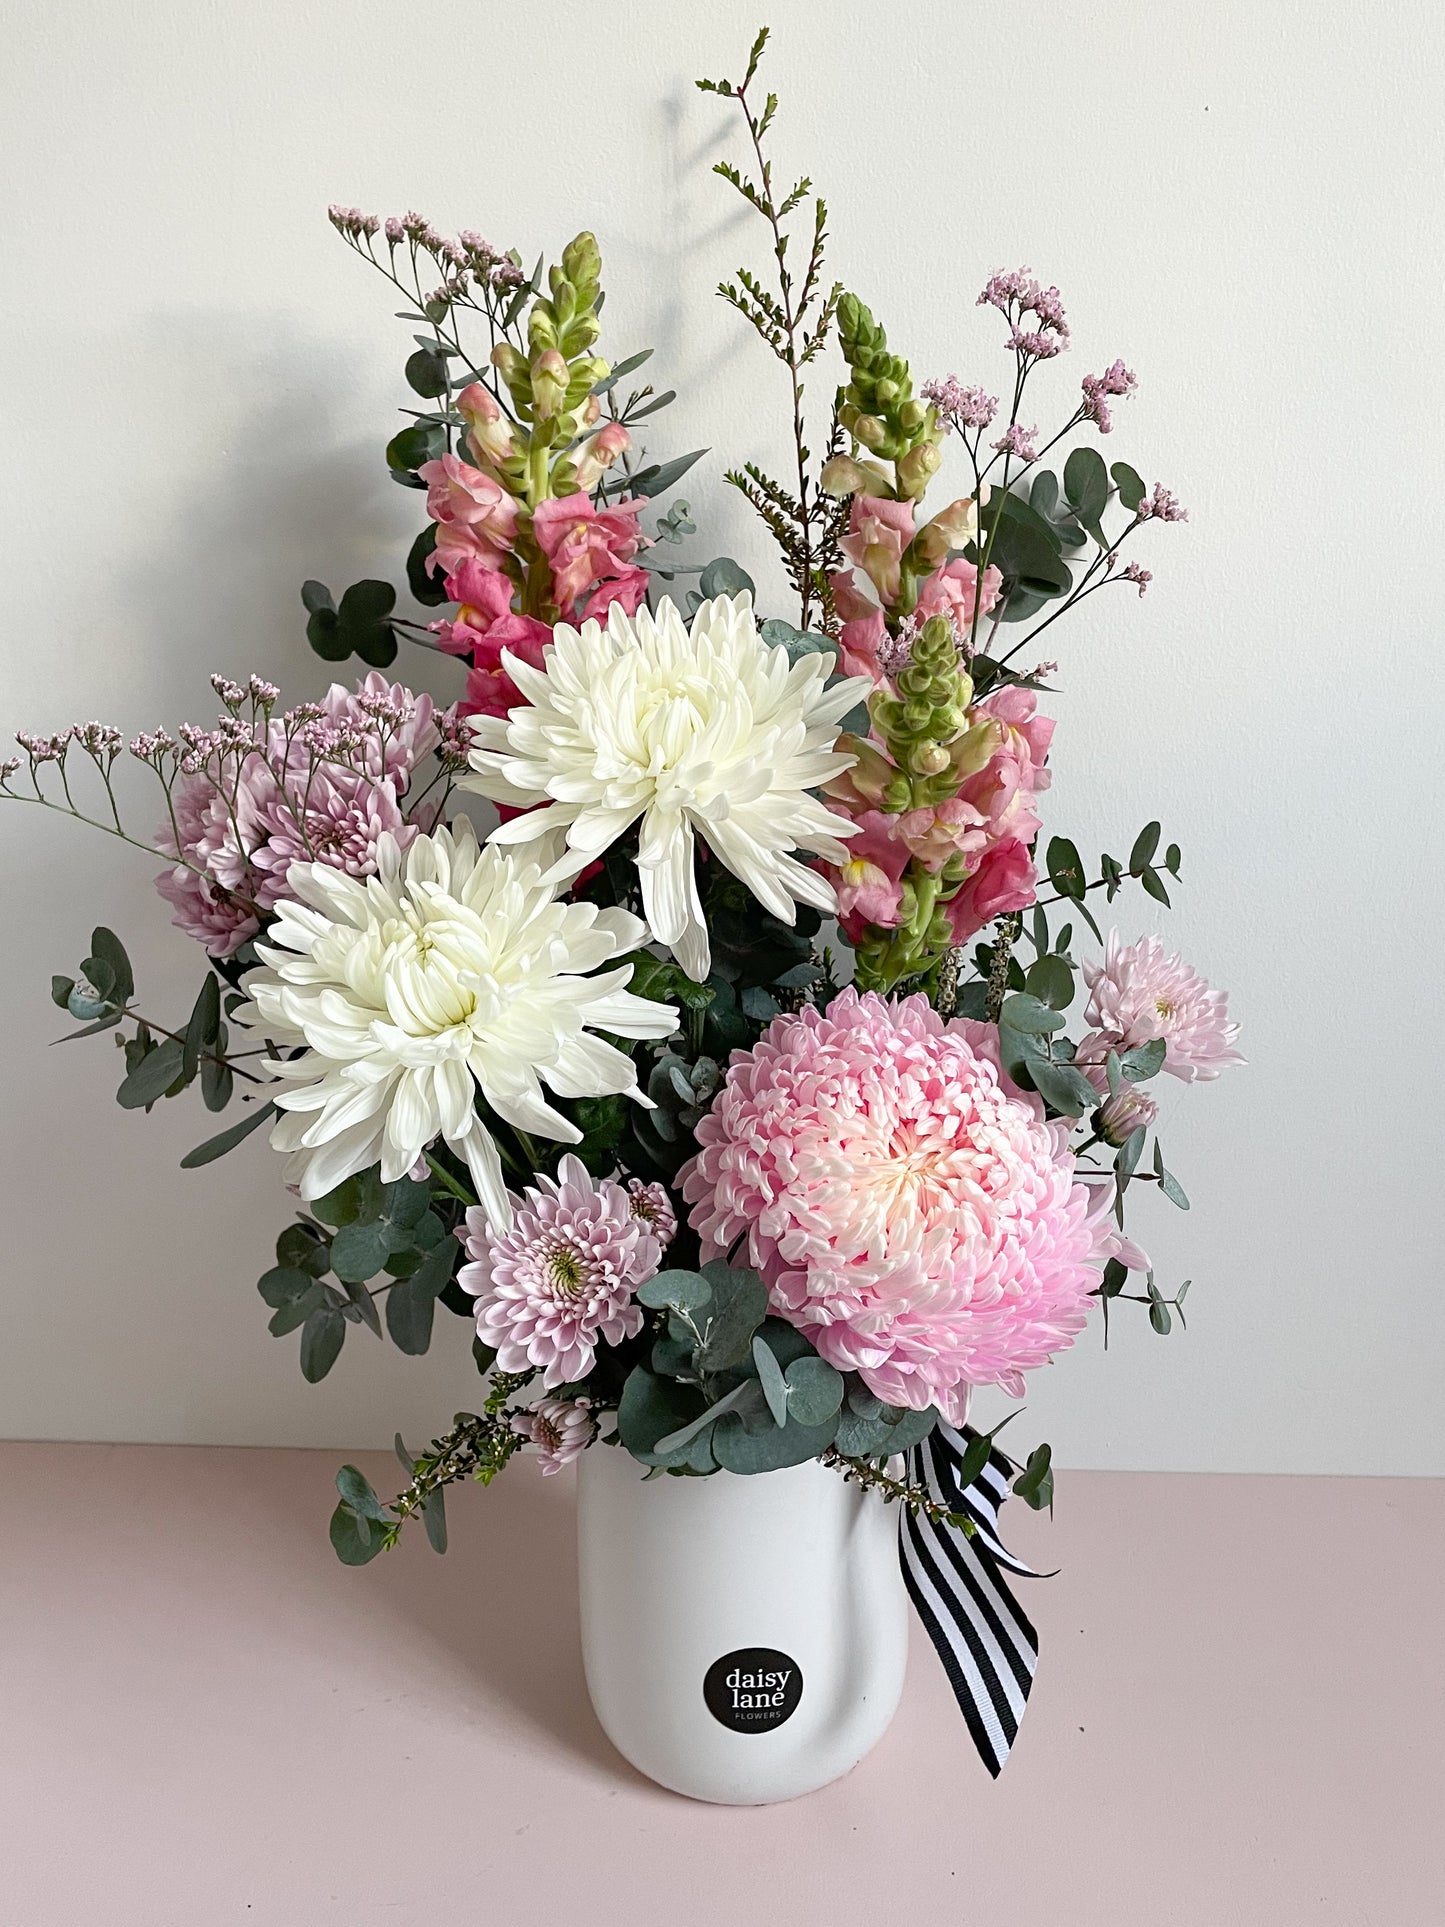 Pastel Vase Arrangement